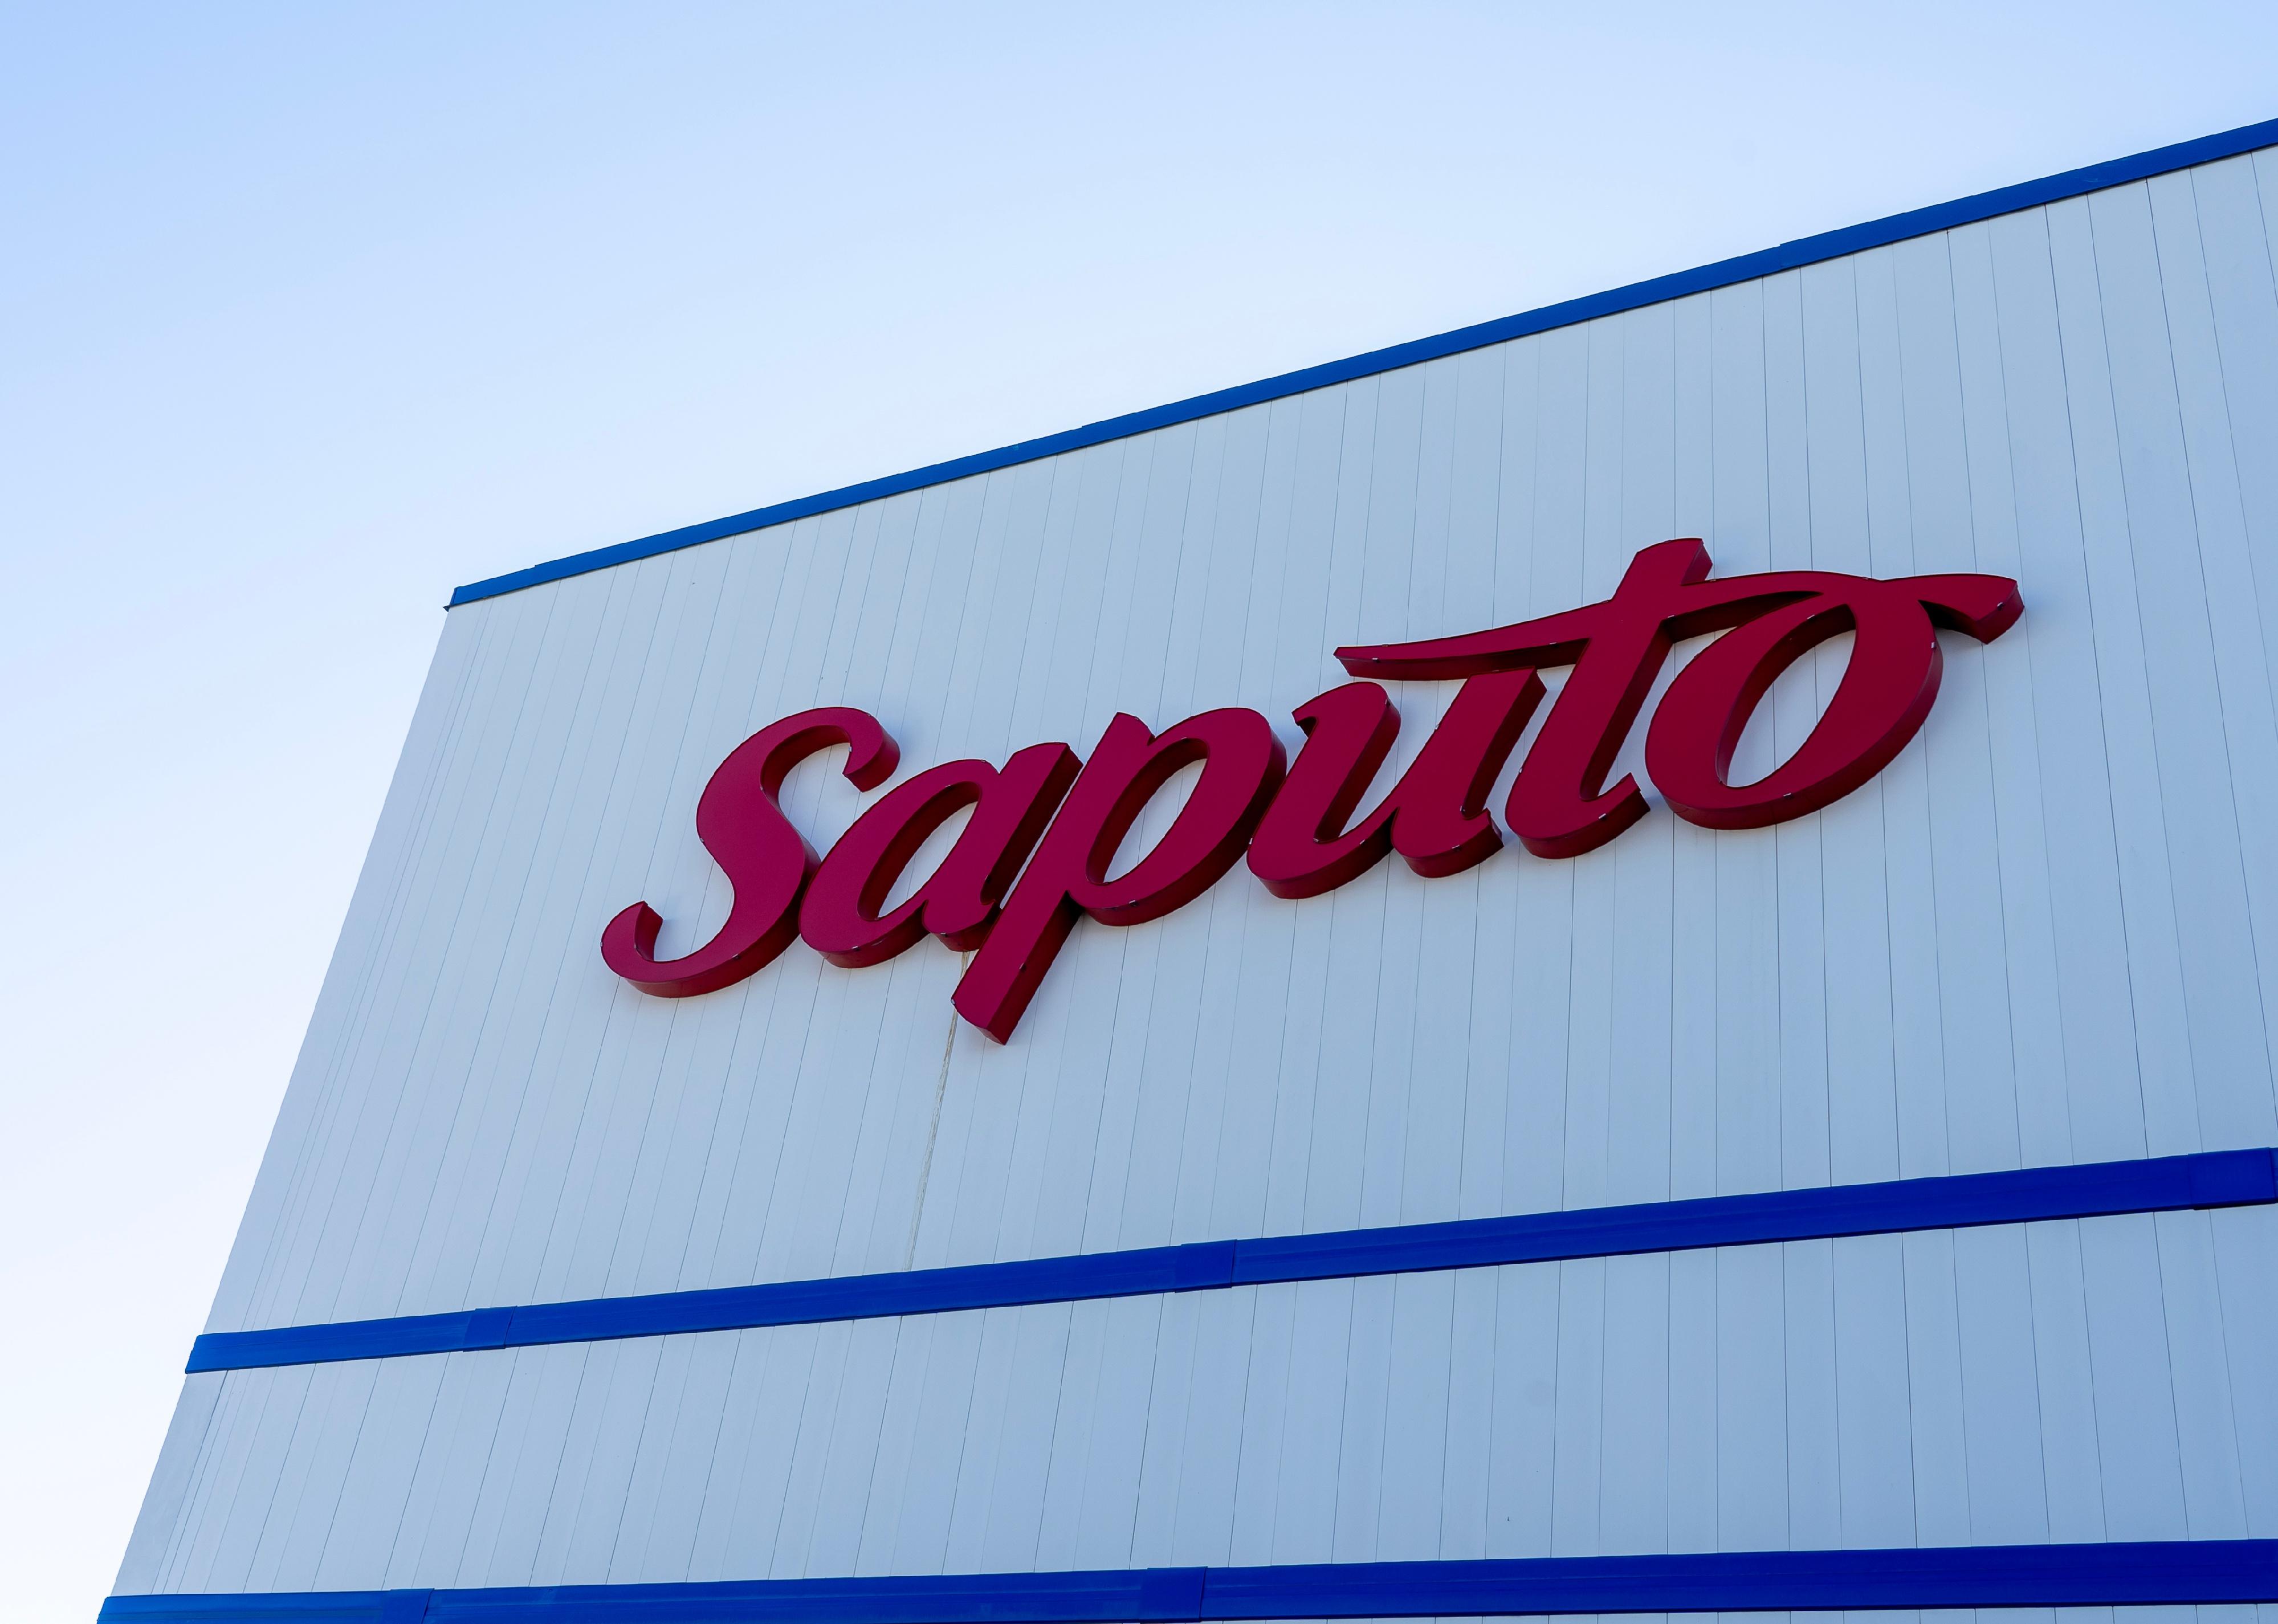 Saputo sign on the building in Woodbridge, Ontario, Canada.